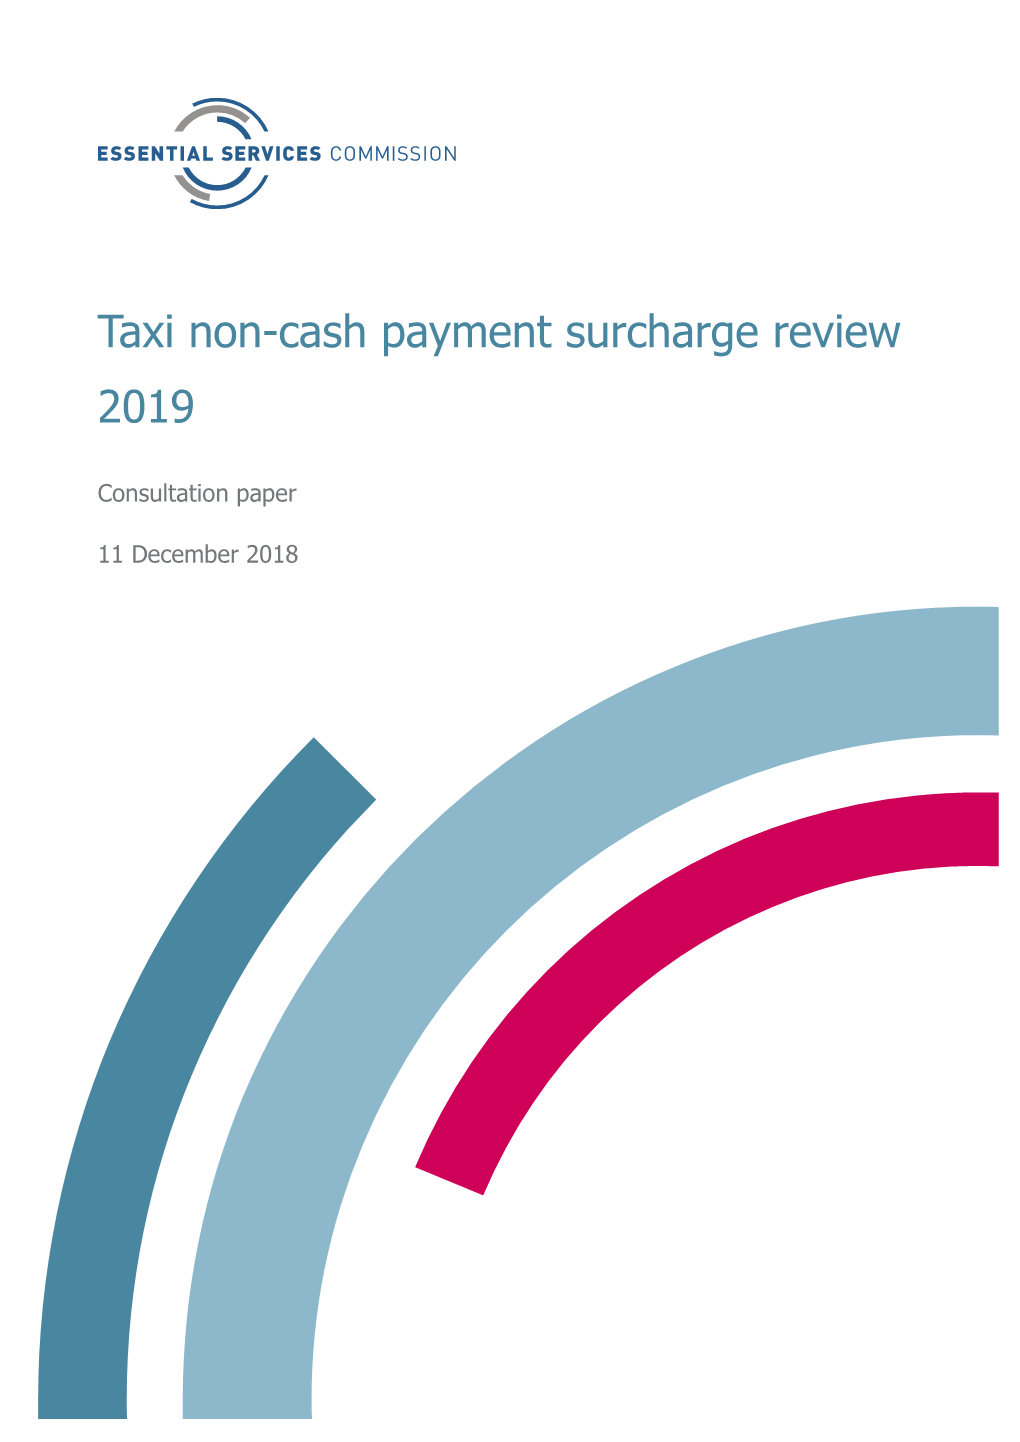 Taxi Non-Cash Payment Surcharge Review 2019